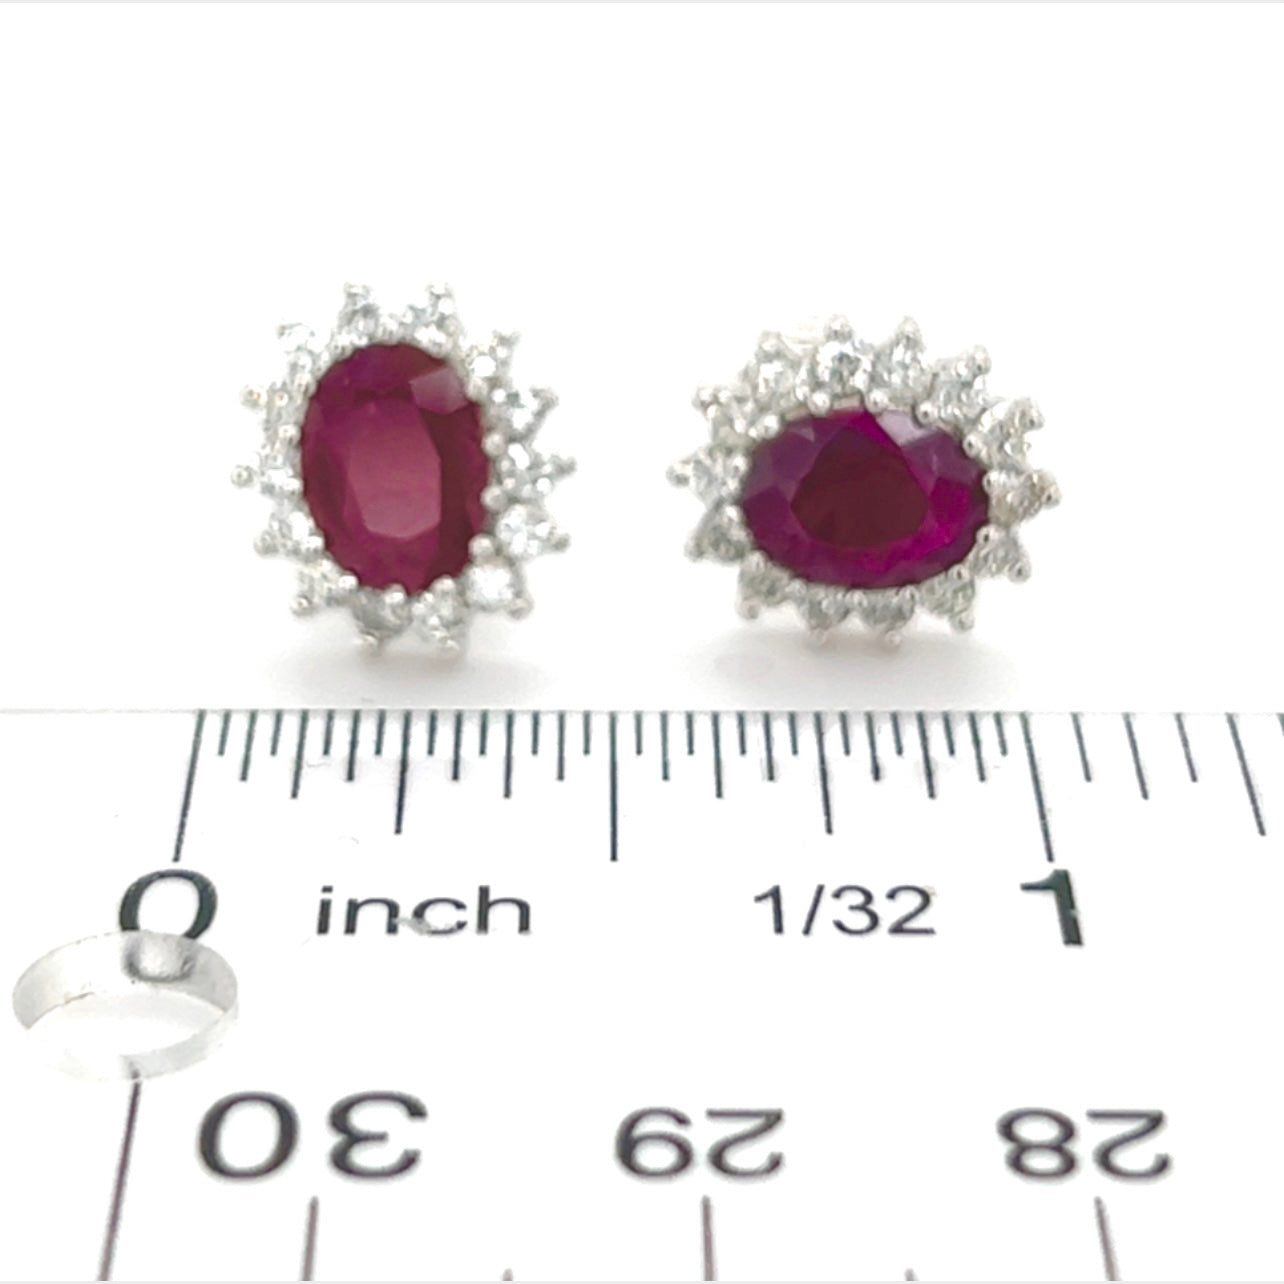 Natural Ruby Diamond Earrings 14k Gold 4.04 TCW Certified $5,250 215094 - Certified Estate Jewelry